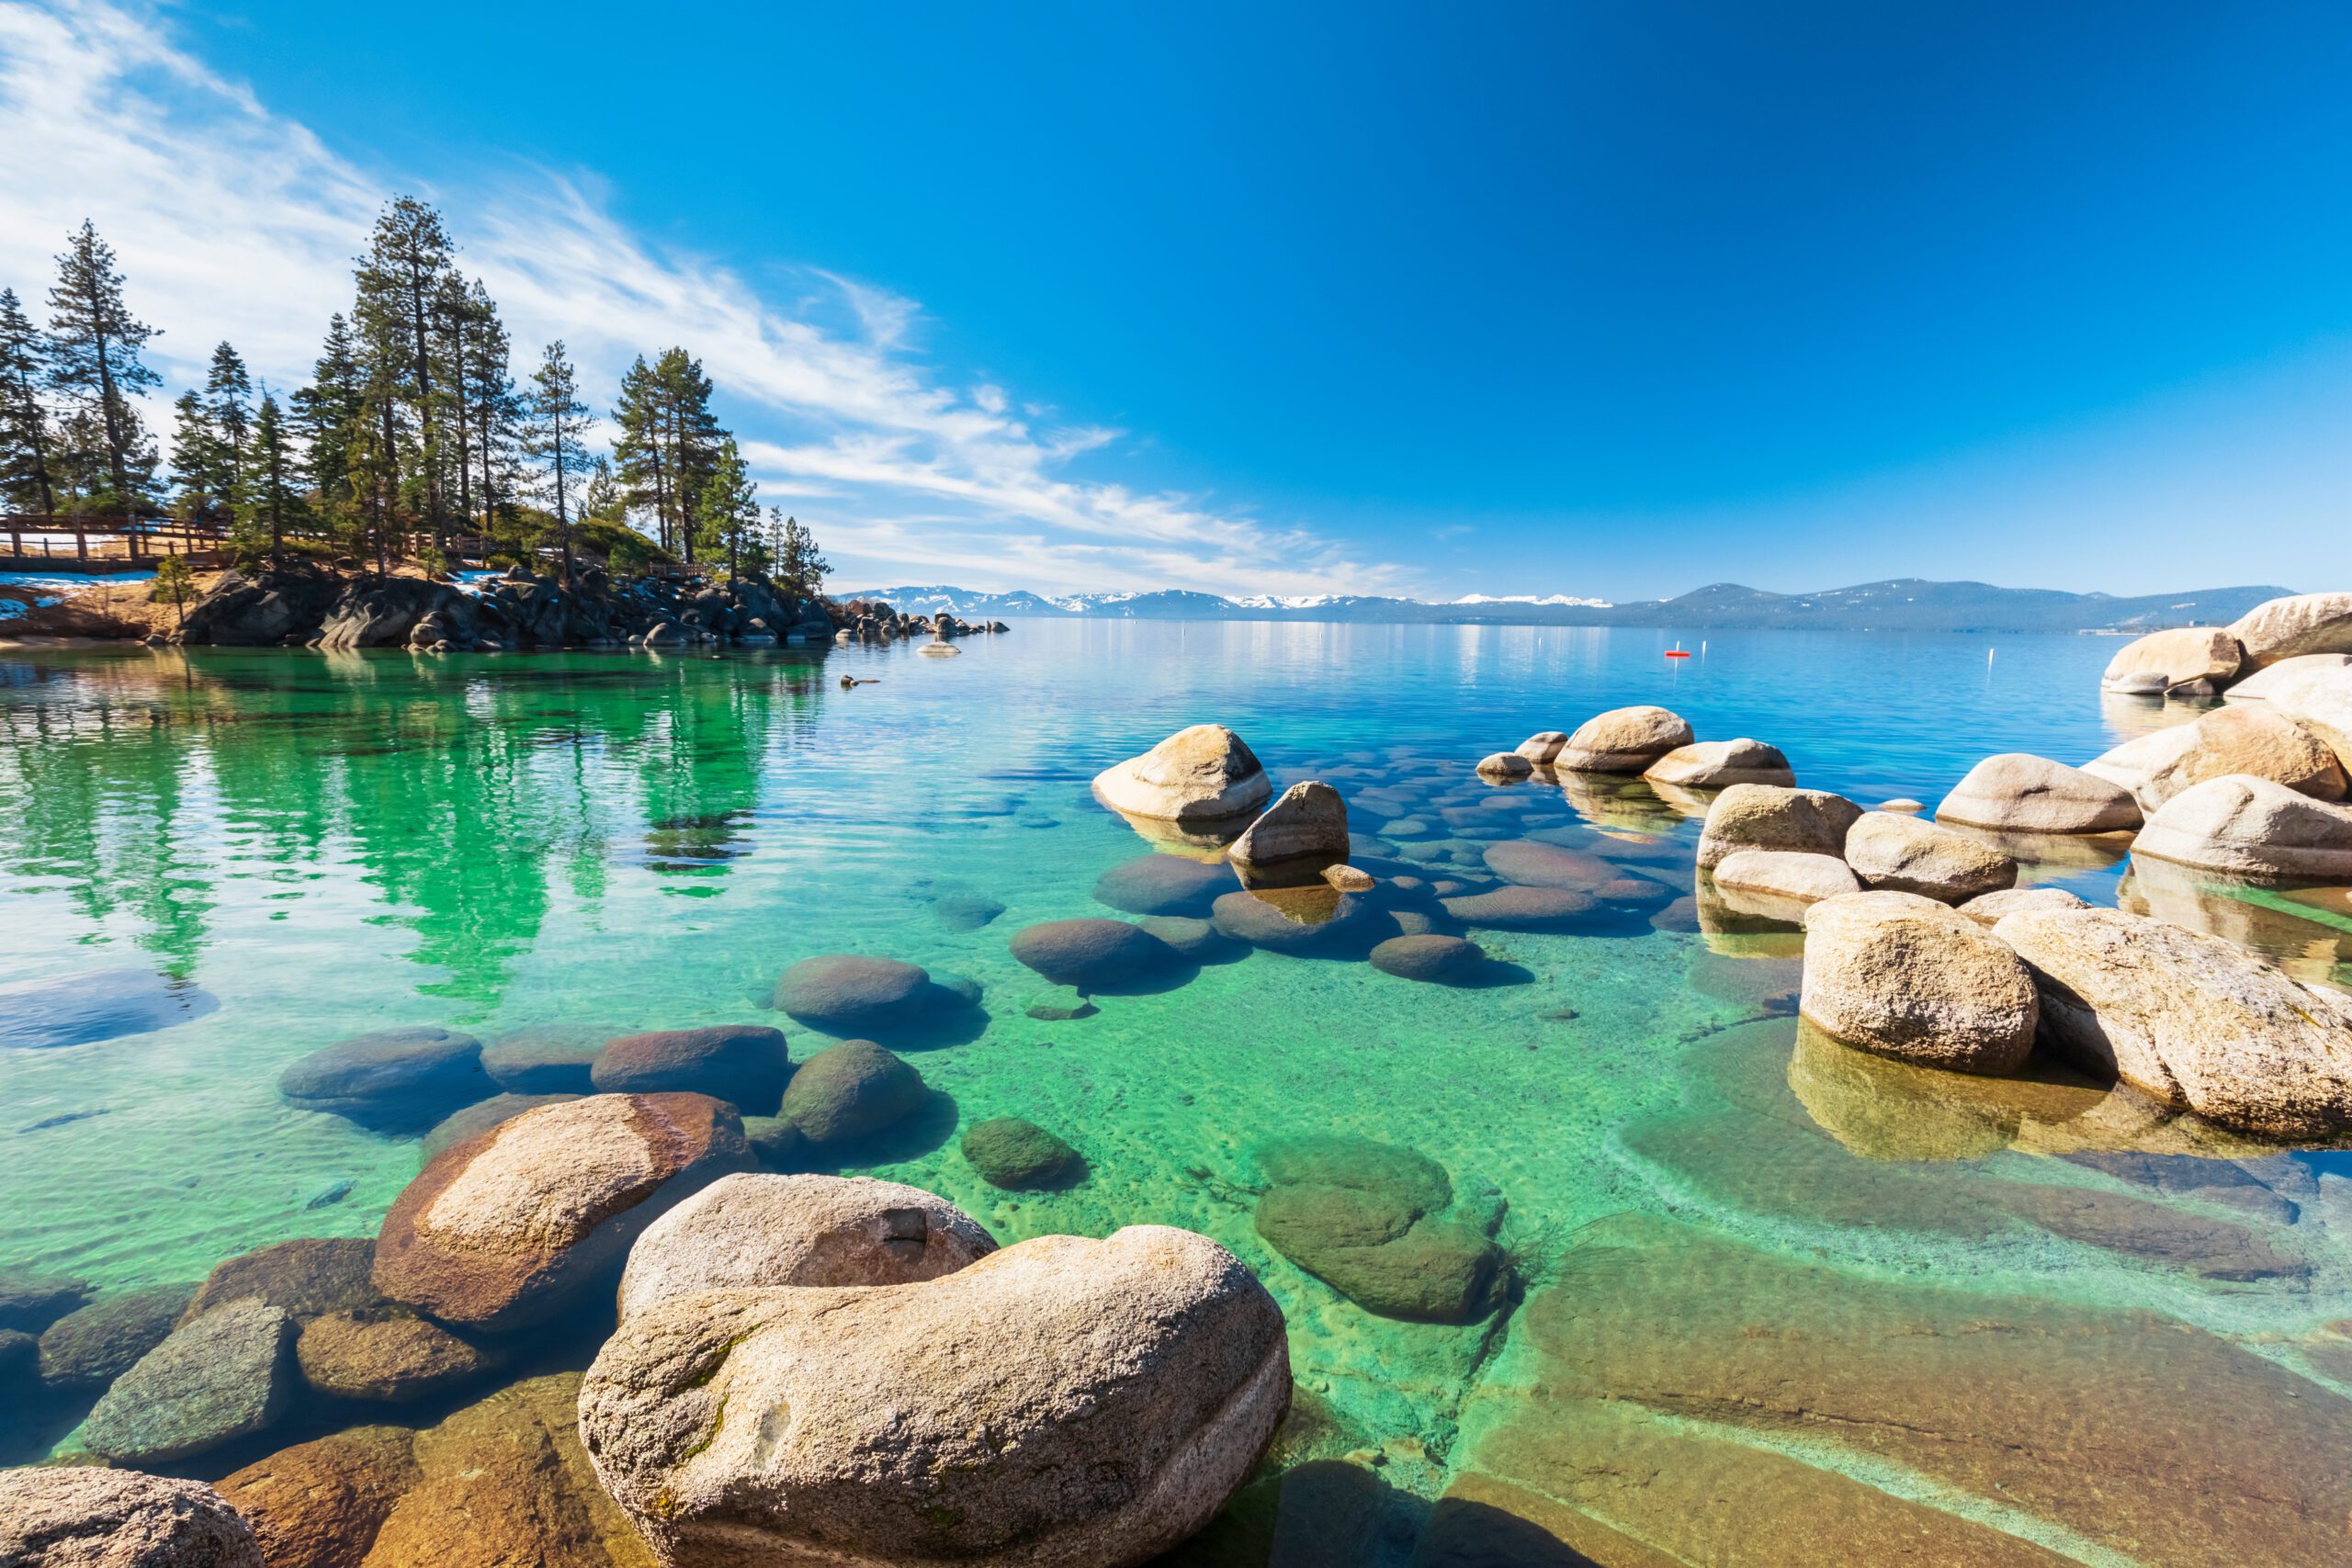 https://stock.adobe.com/nl/images/beautiful-lake-tahoe-beach/53464123?prev_url=detail